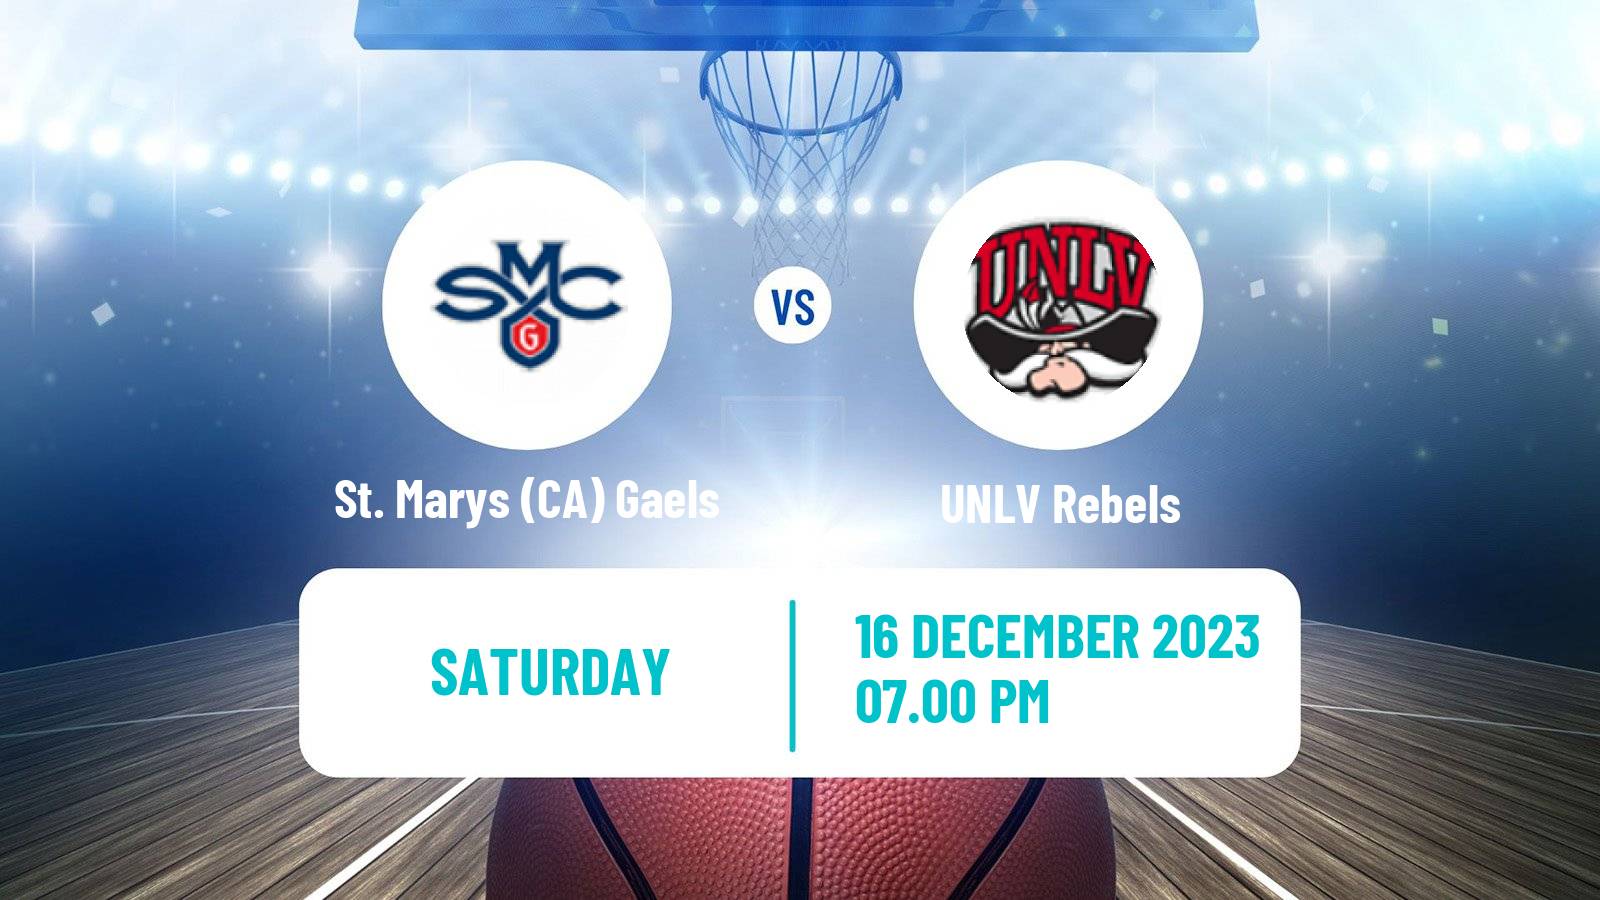 Basketball NCAA College Basketball St. Marys (CA) Gaels - UNLV Rebels